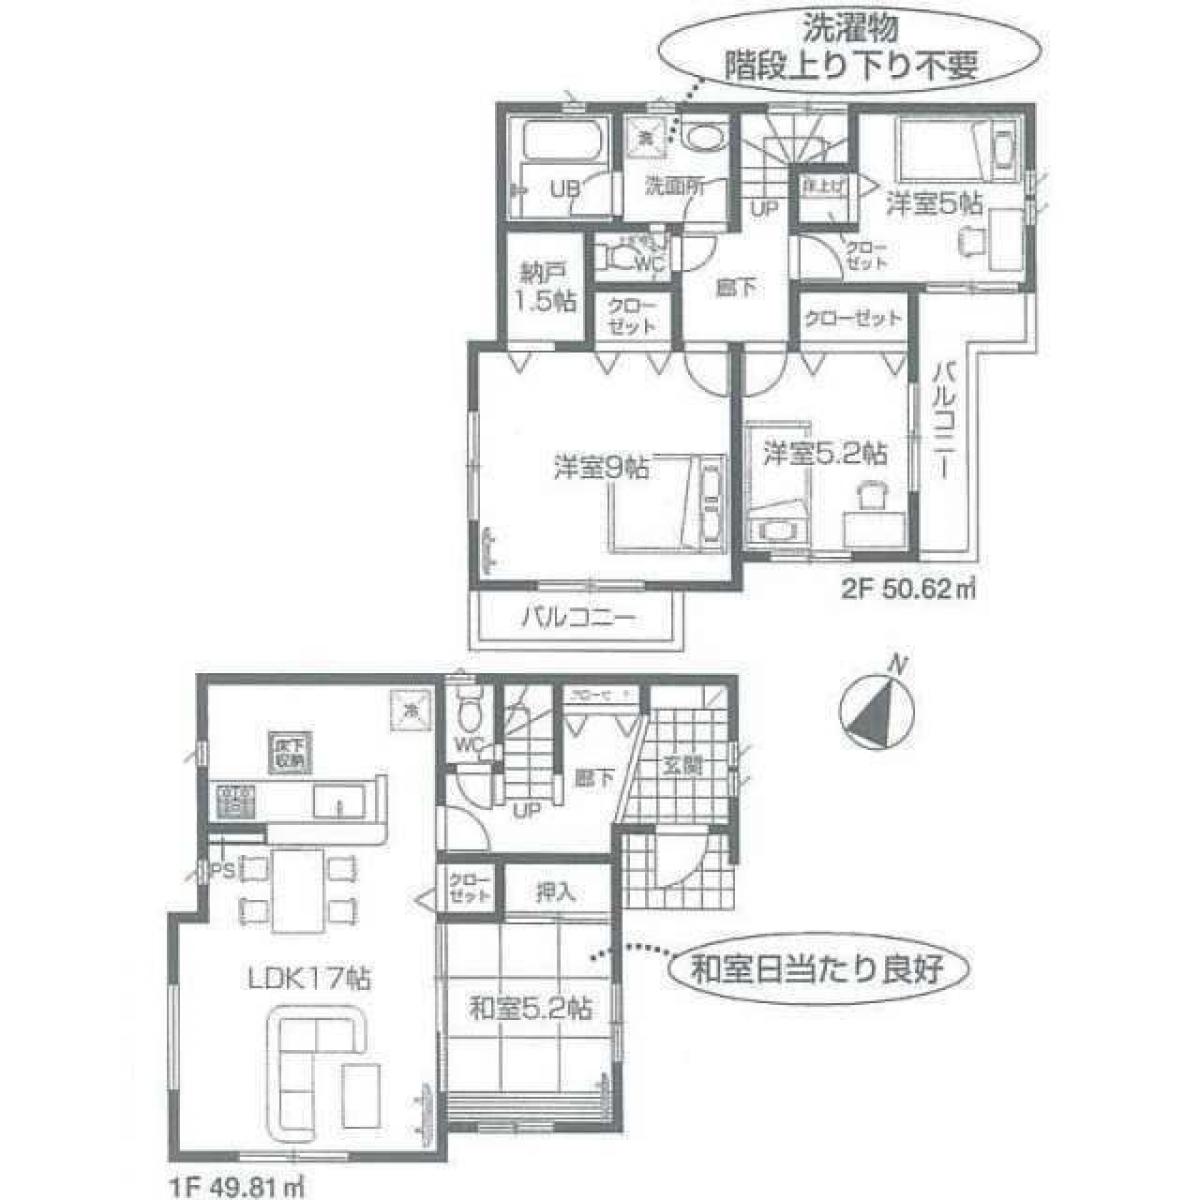 Picture of Home For Sale in Iruma Shi, Saitama, Japan